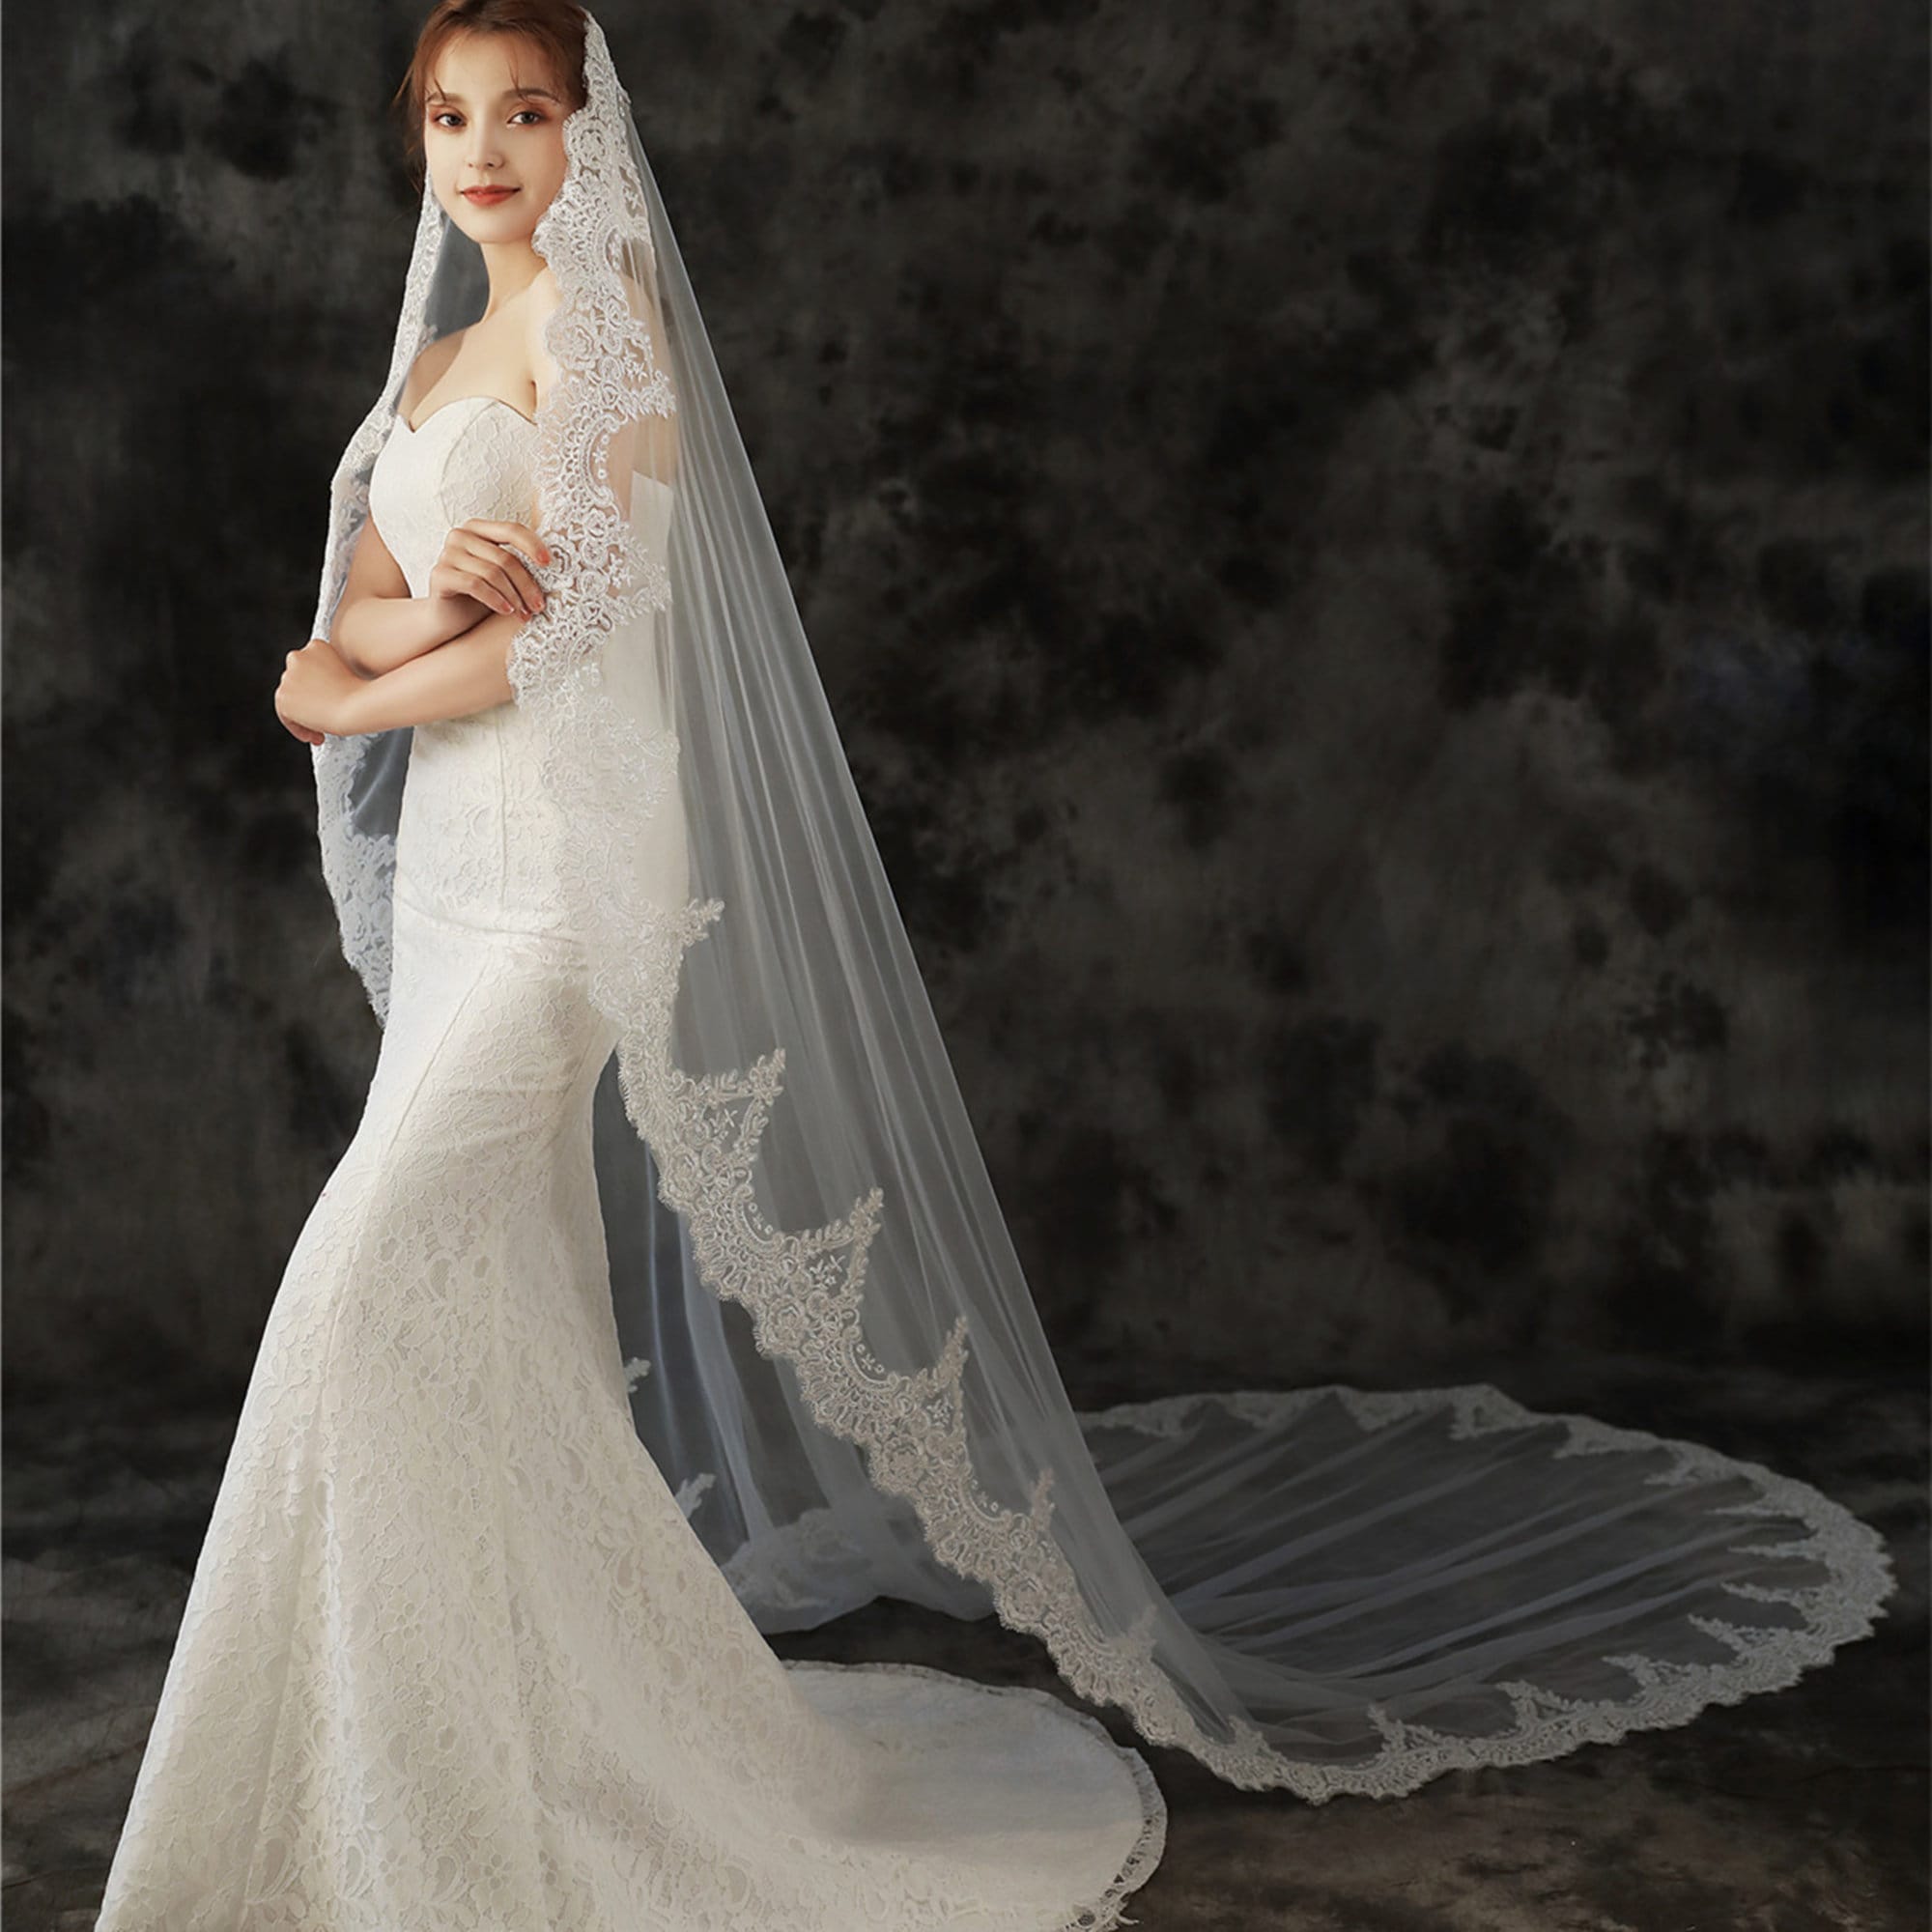 YAOLAN White Color Women Wedding Bridal Veils Appliques Lace Cathedral Veil  118X79 